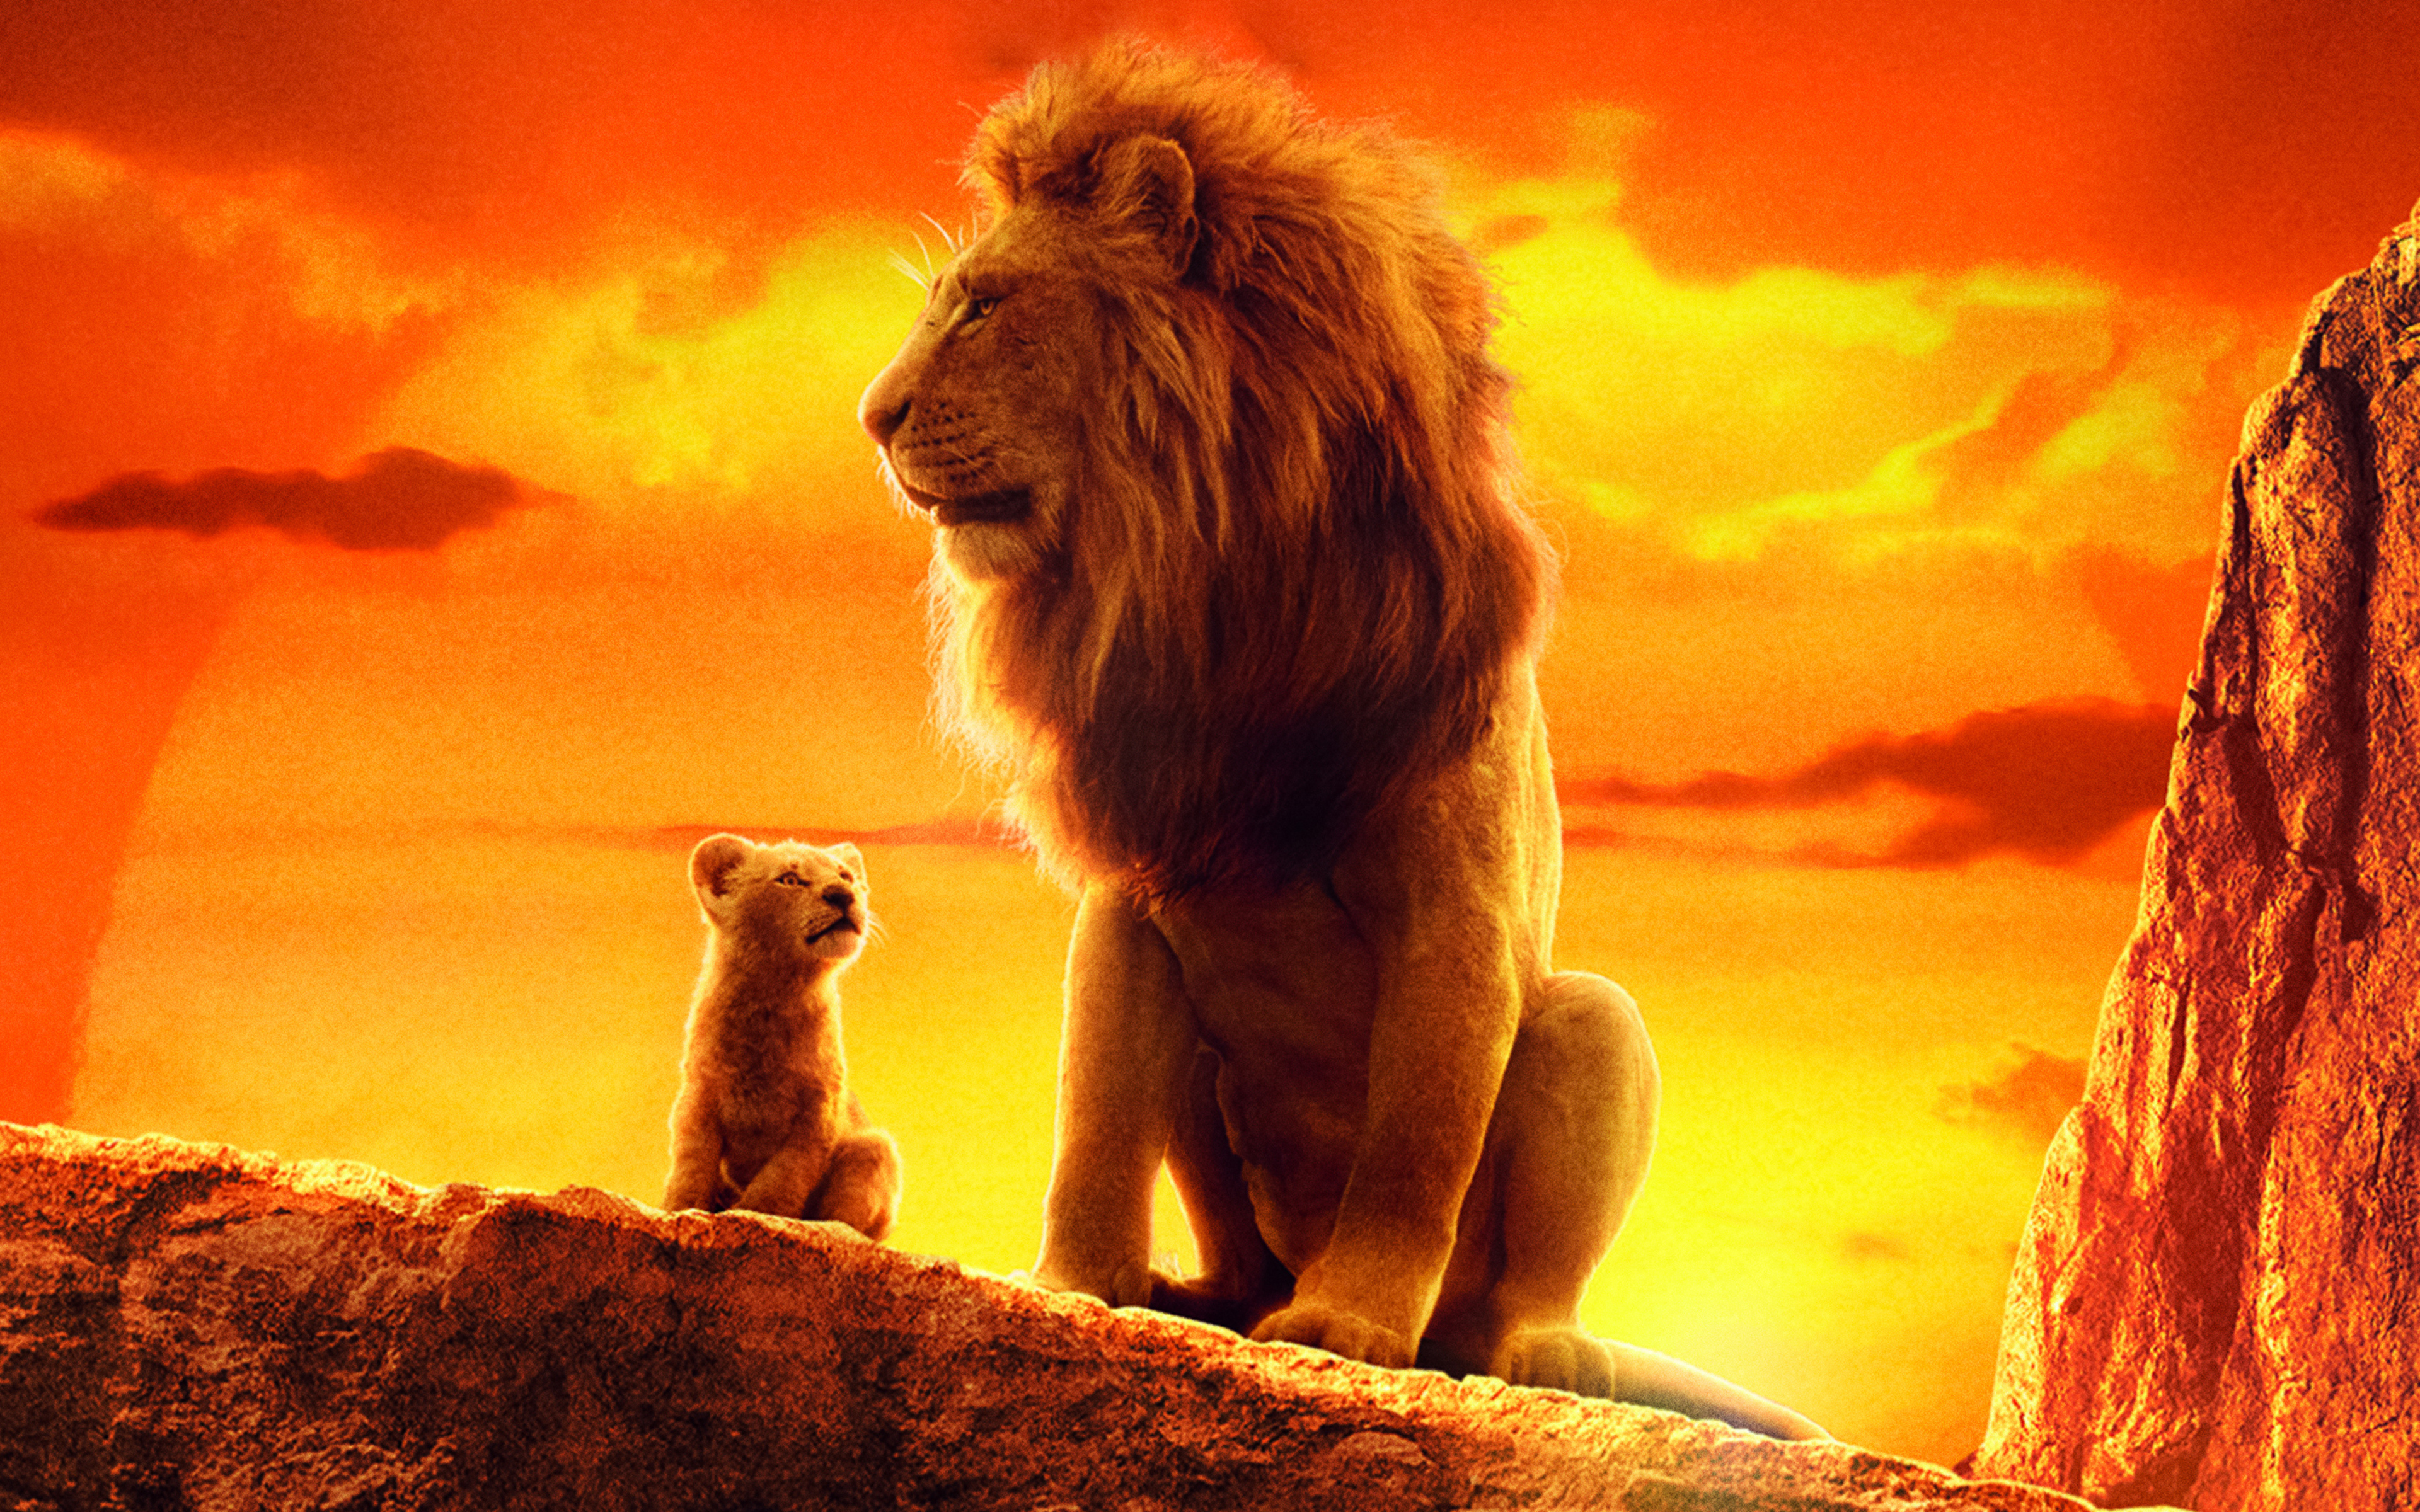 The Lion King Wallpaper 4k Ultra HD